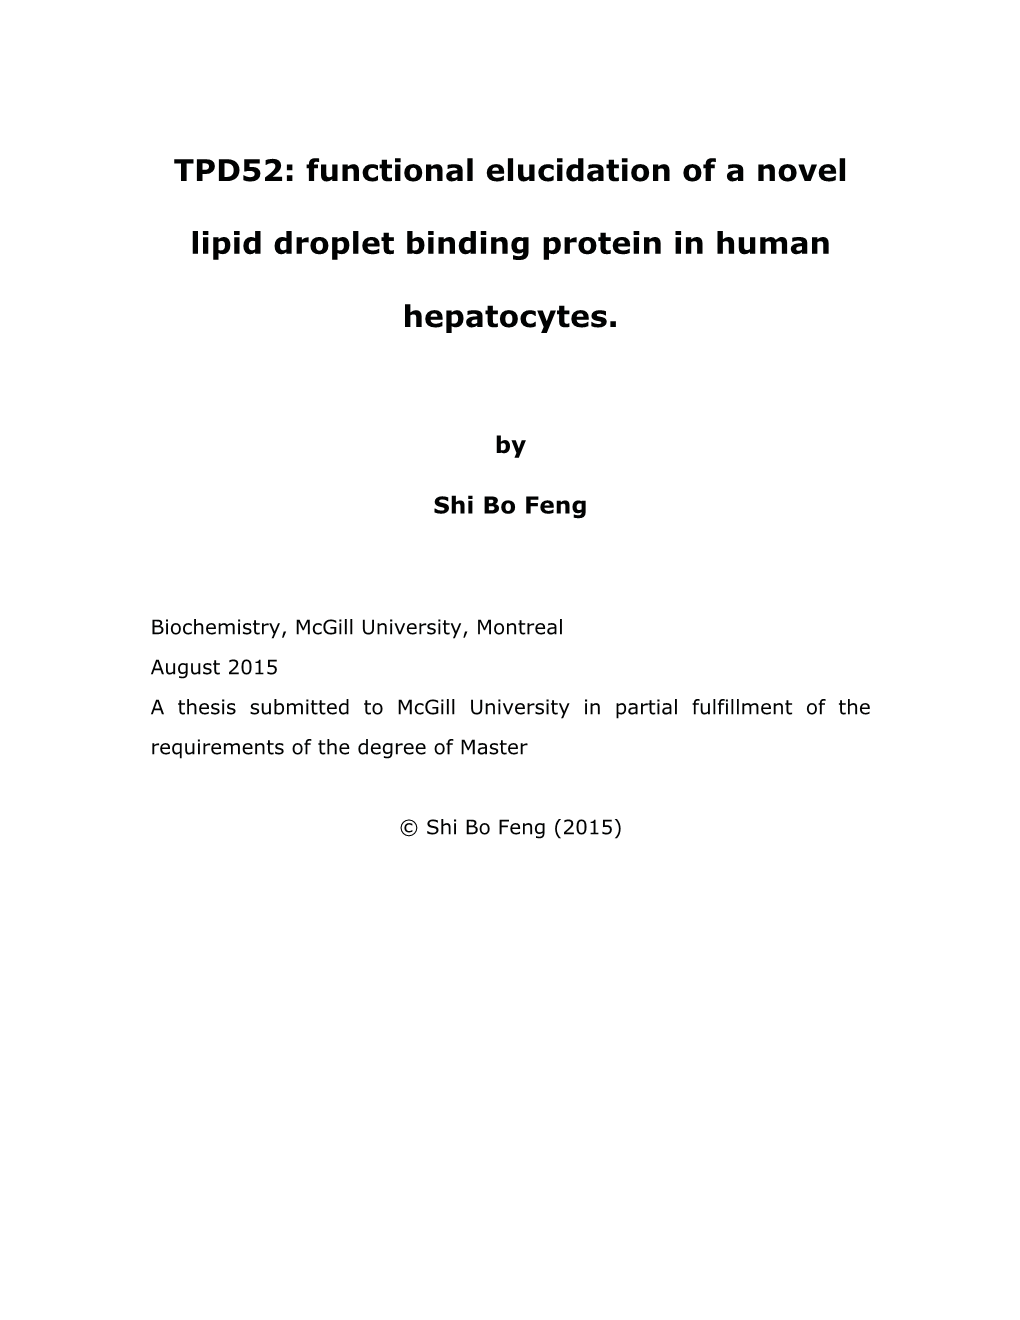 TPD52: Functional Elucidation of a Novel Lipid Droplet Binding Protein in Human Hepatocytes